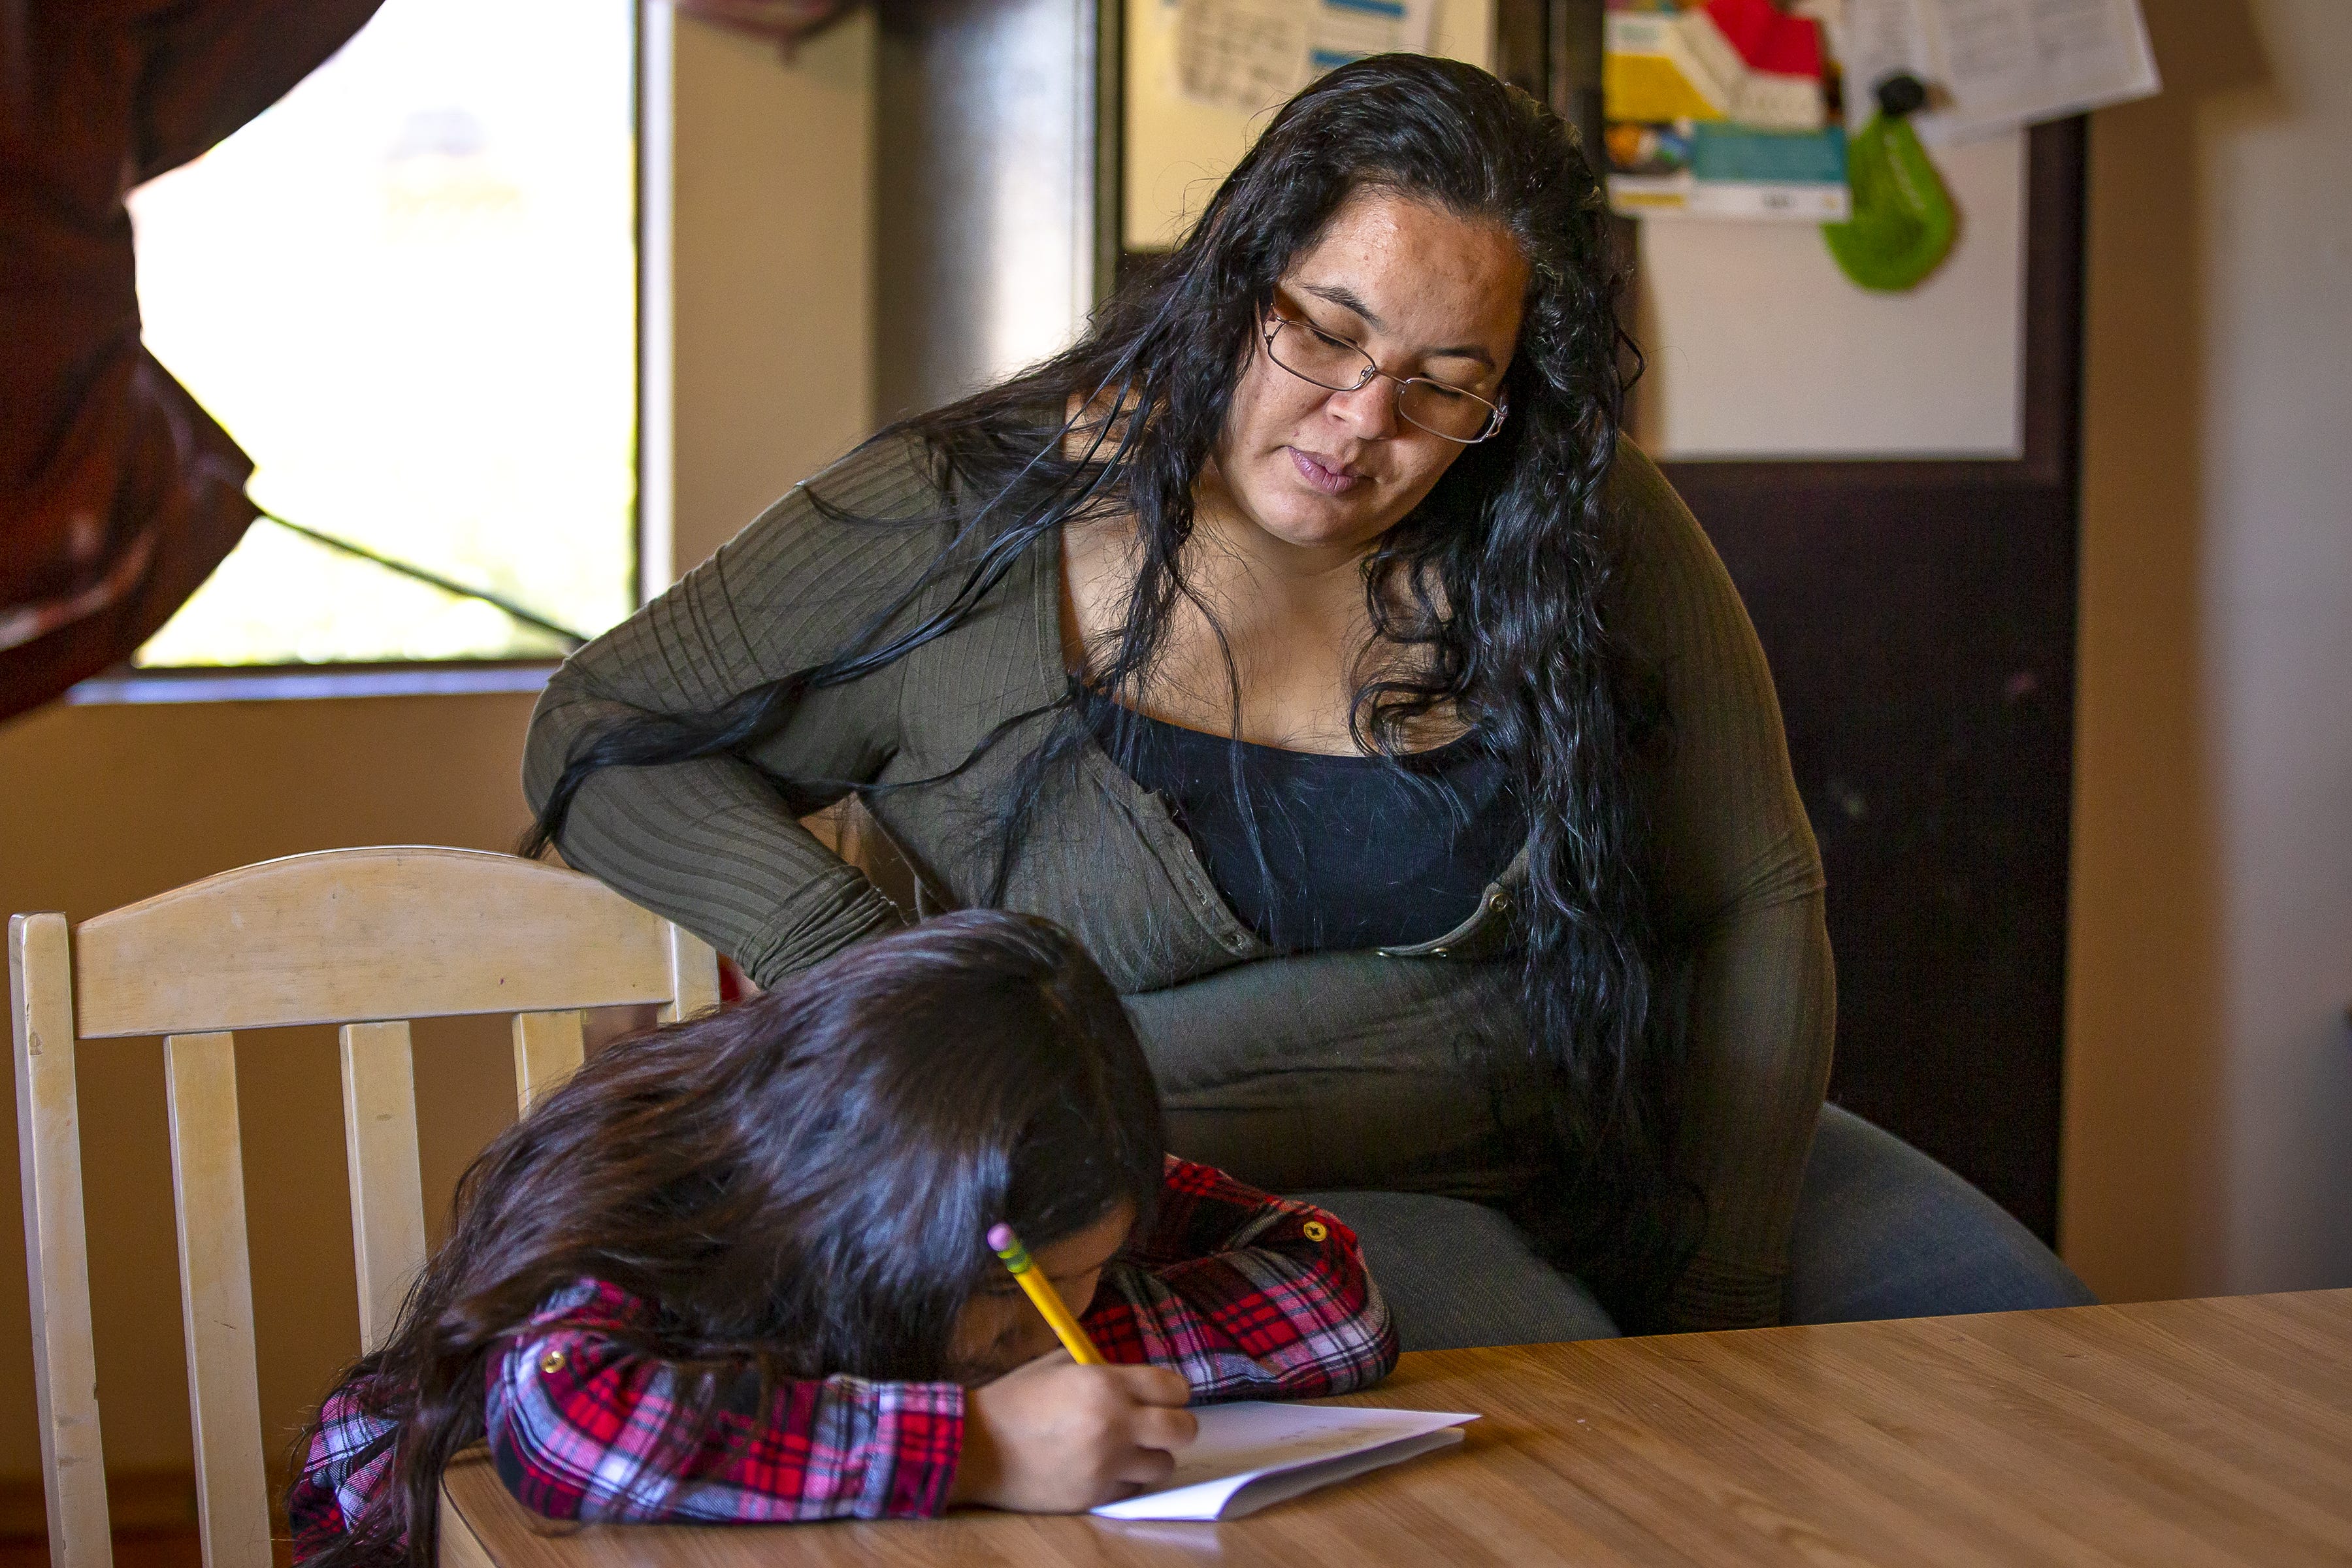 Fernanda Davila, 8, works on homework as her mother, Anarely Jimenez, looks over her progress in their Phoenix home on March 8, 2022.